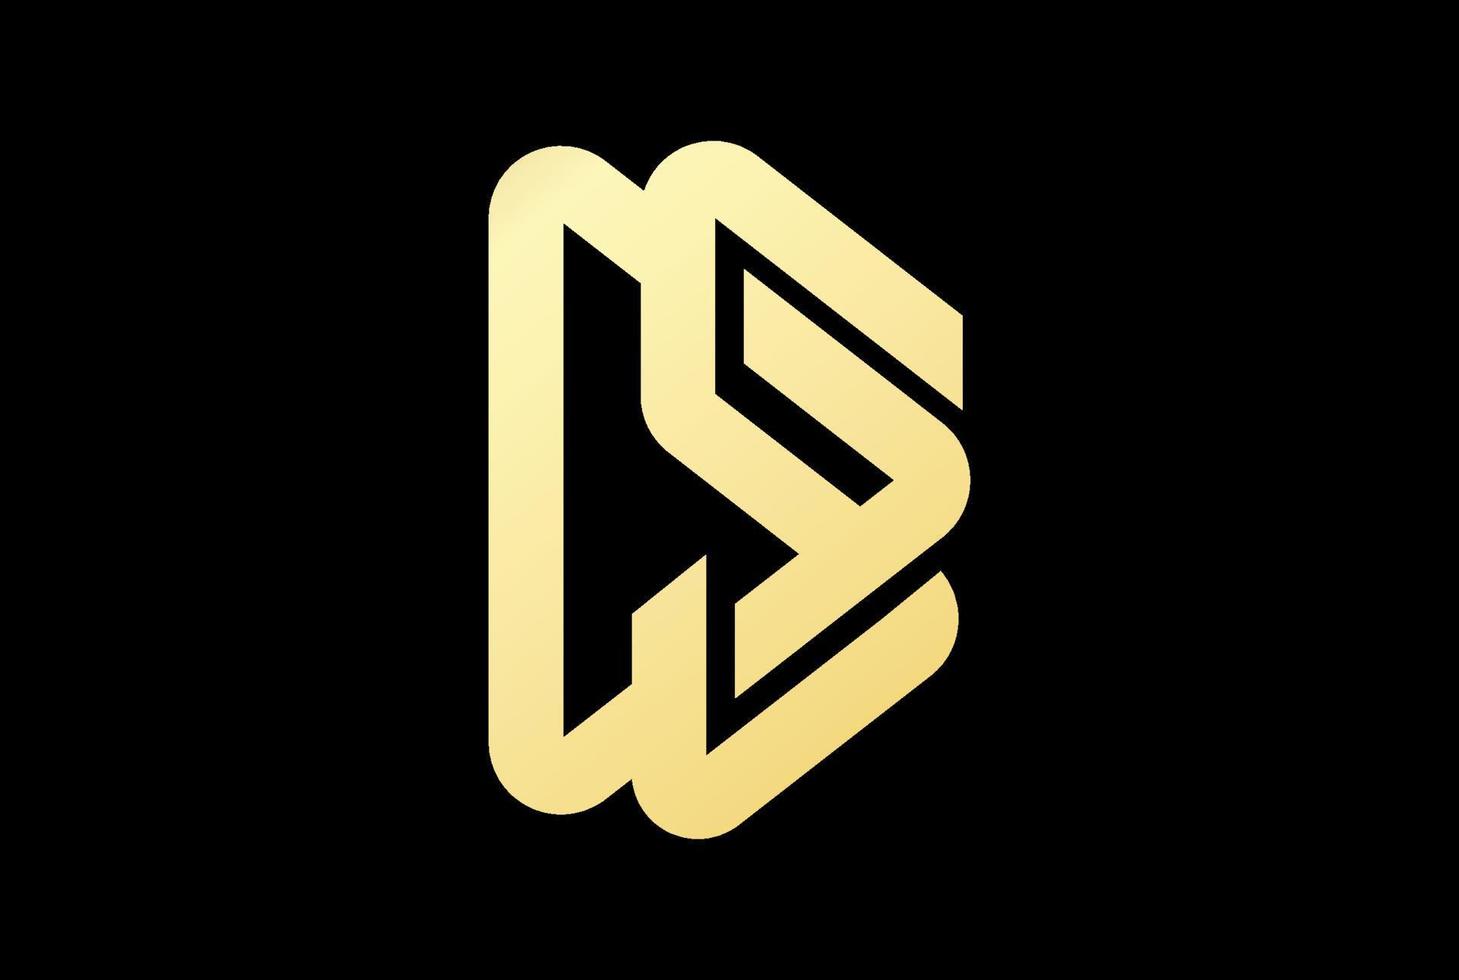 elegante luxo triângulo dourado geométrico letra inicial ds sd logotipo design vector